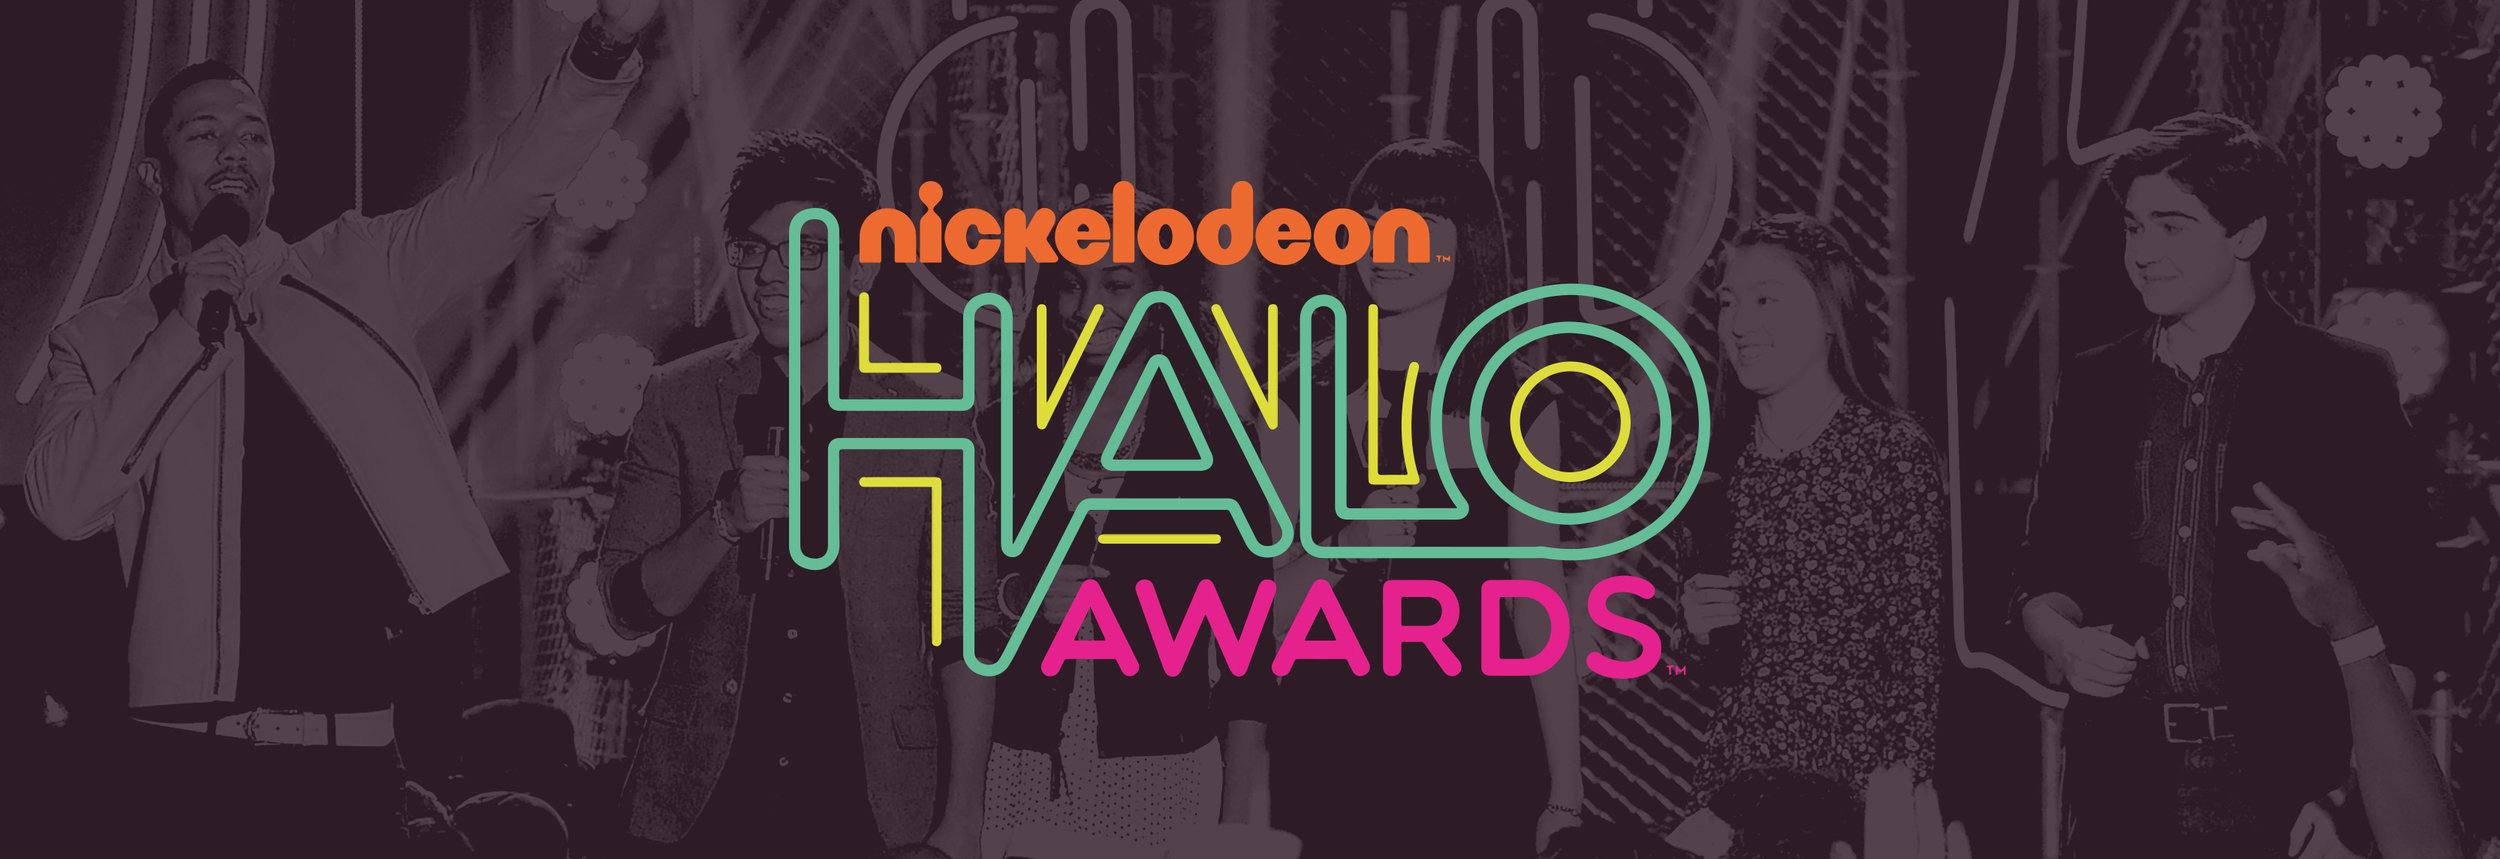 Nickelodeon HALO Award